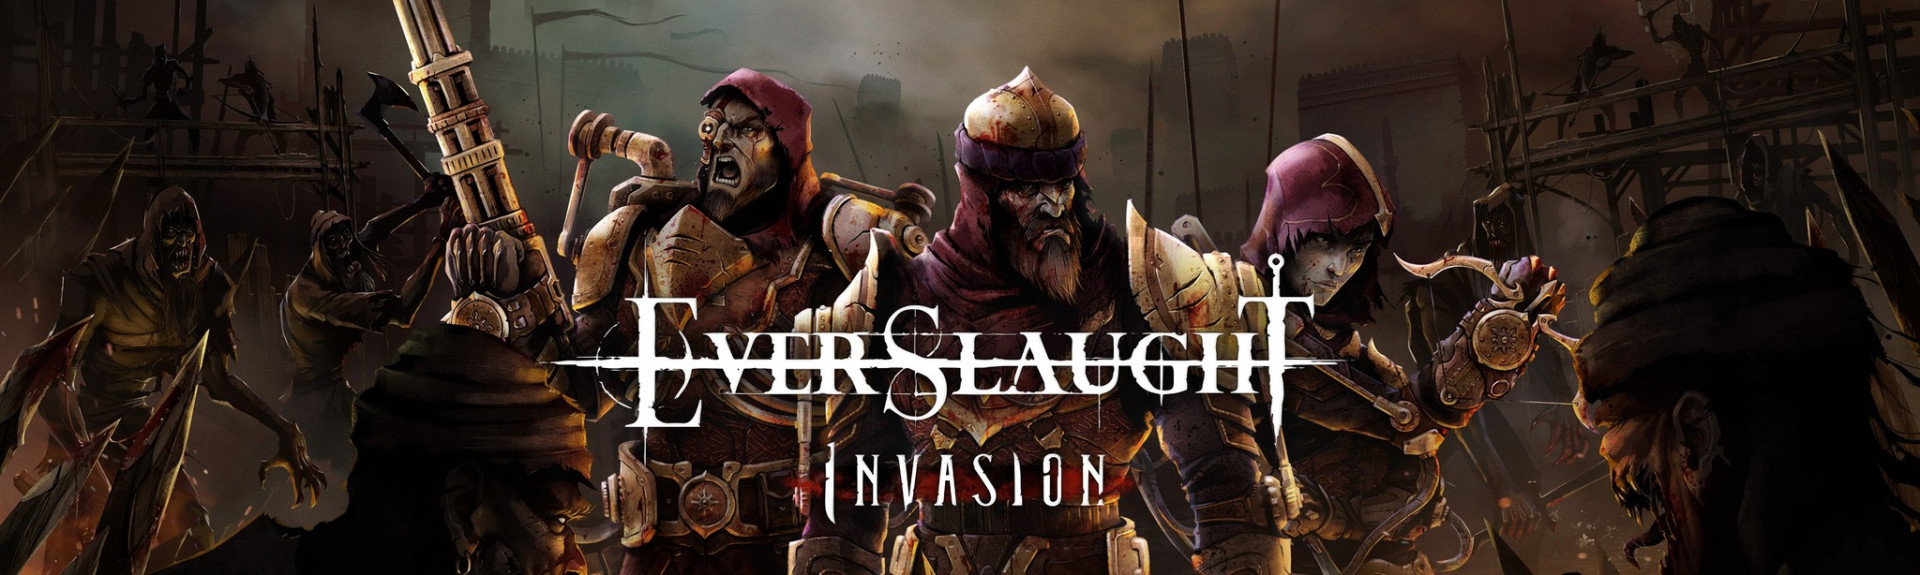 Everslaught Invasion: ANÁLISIS